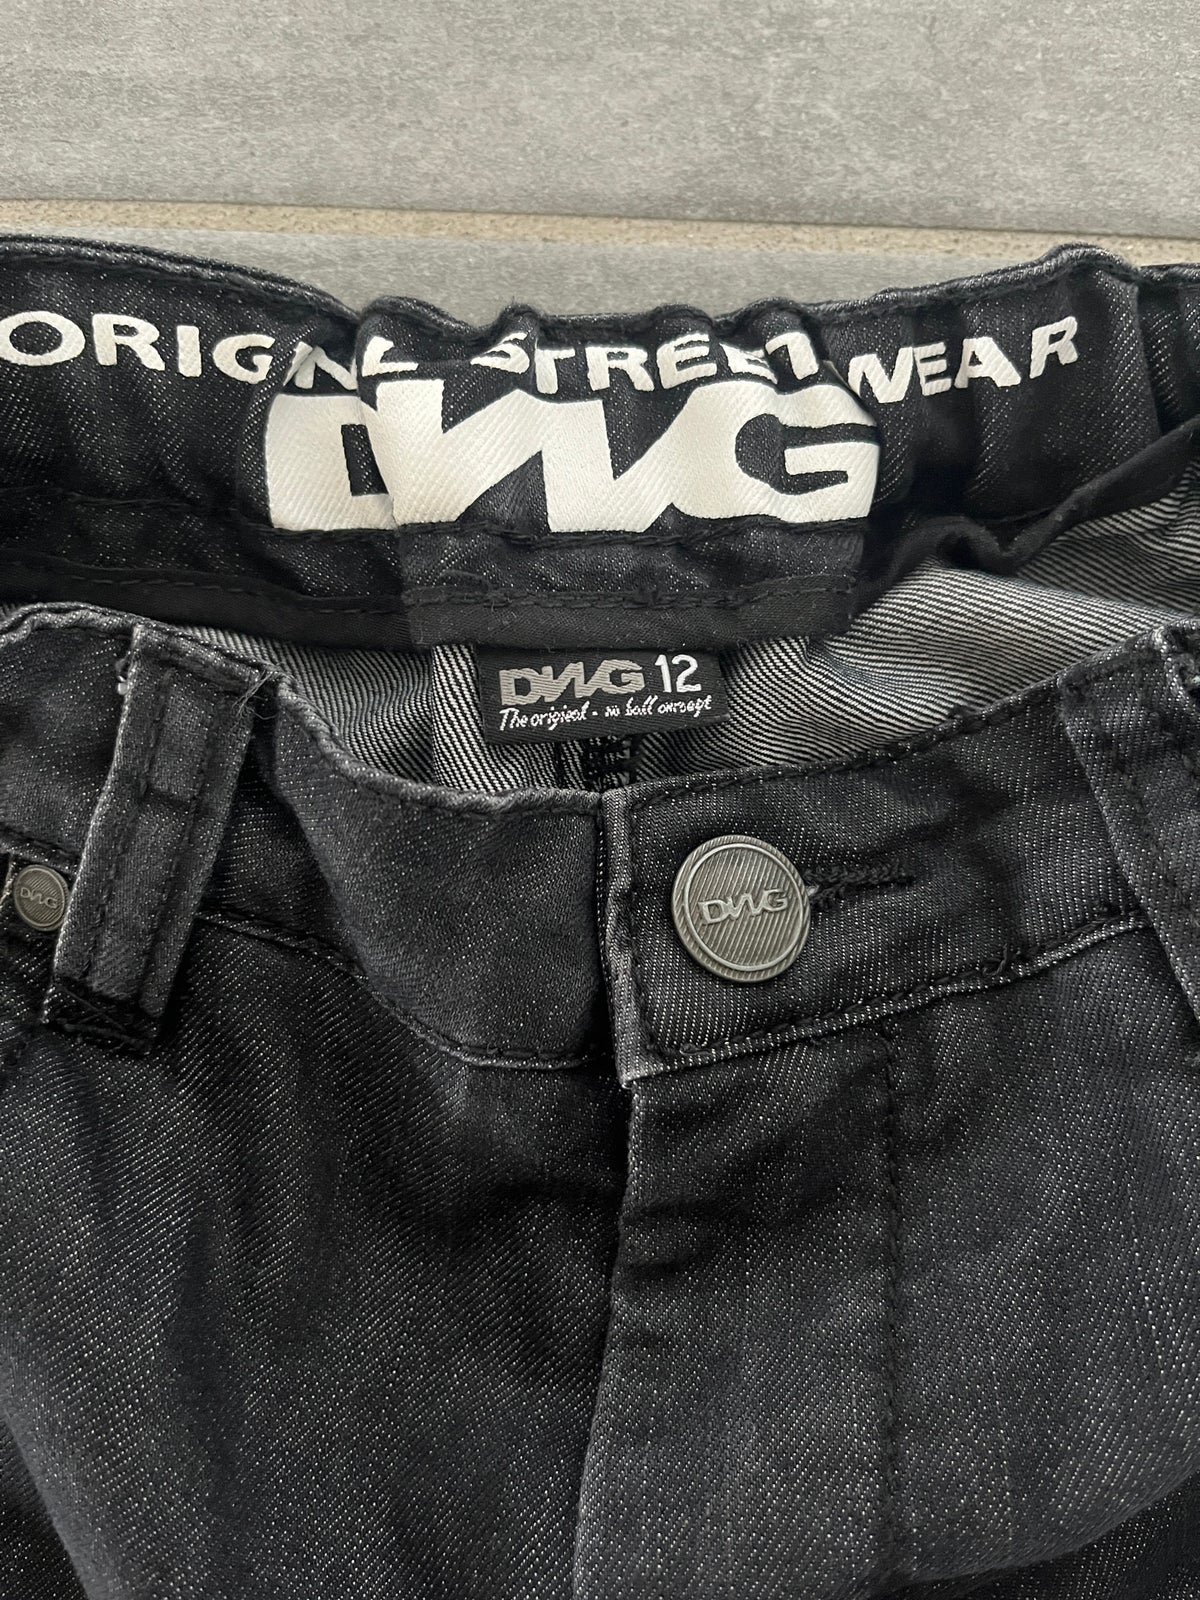 Shorts, Denim shorts, DWG Original Street wear